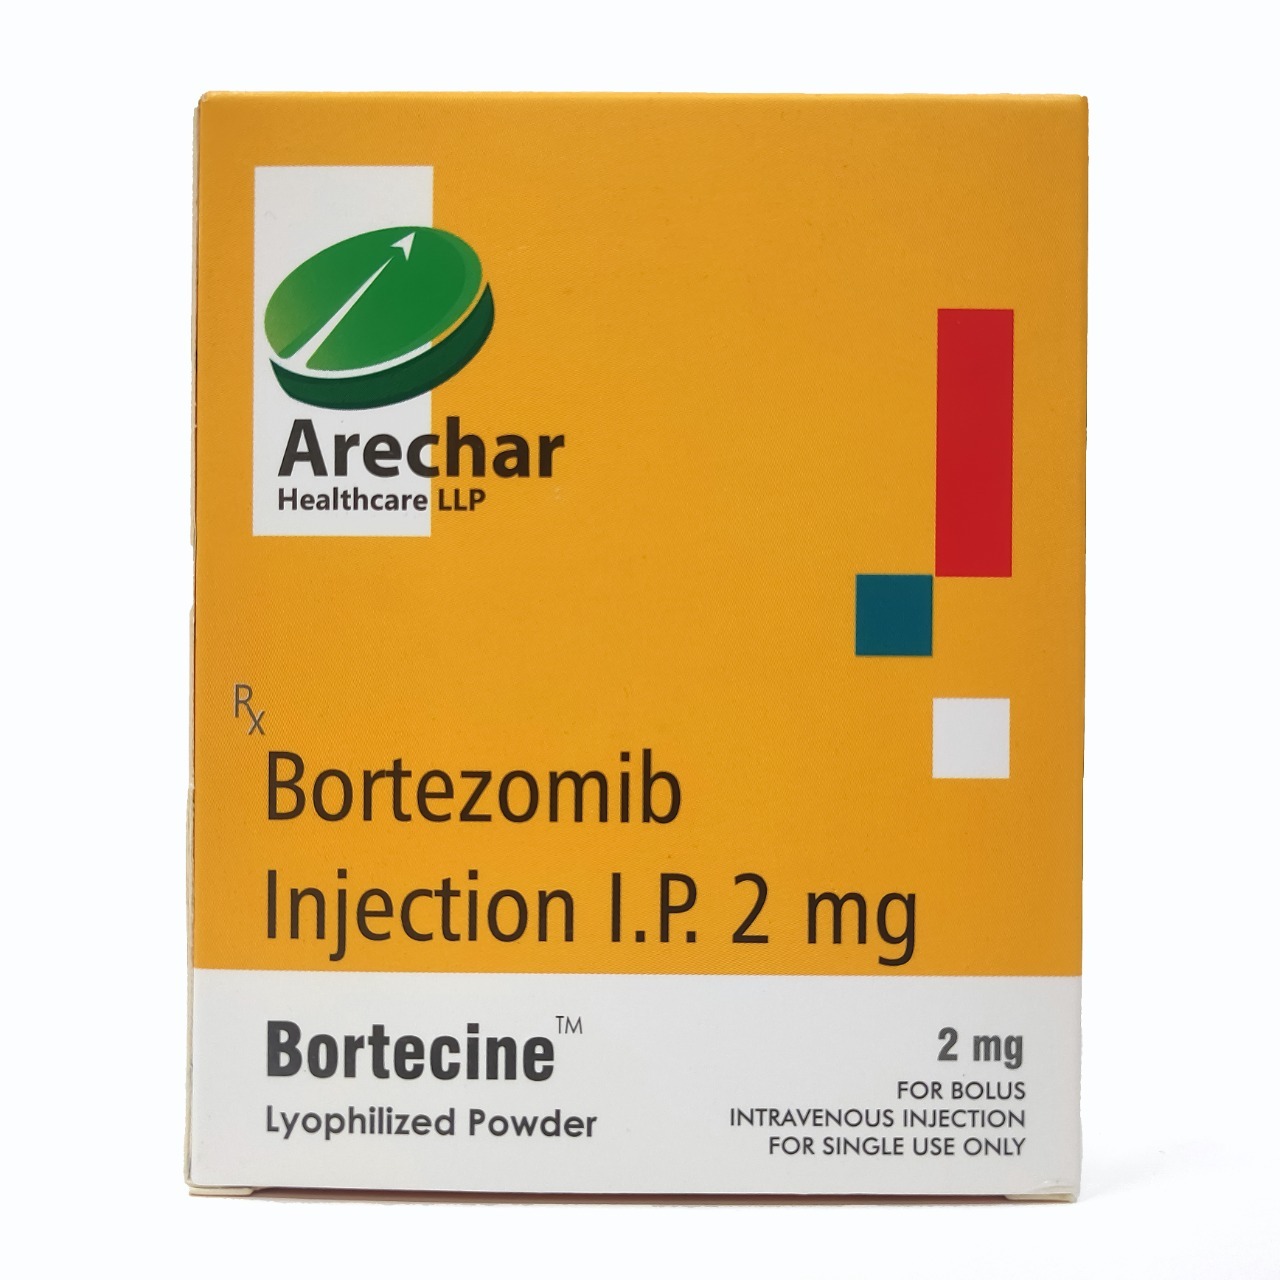 Bortezomib 2mg Injection (Bortecine)